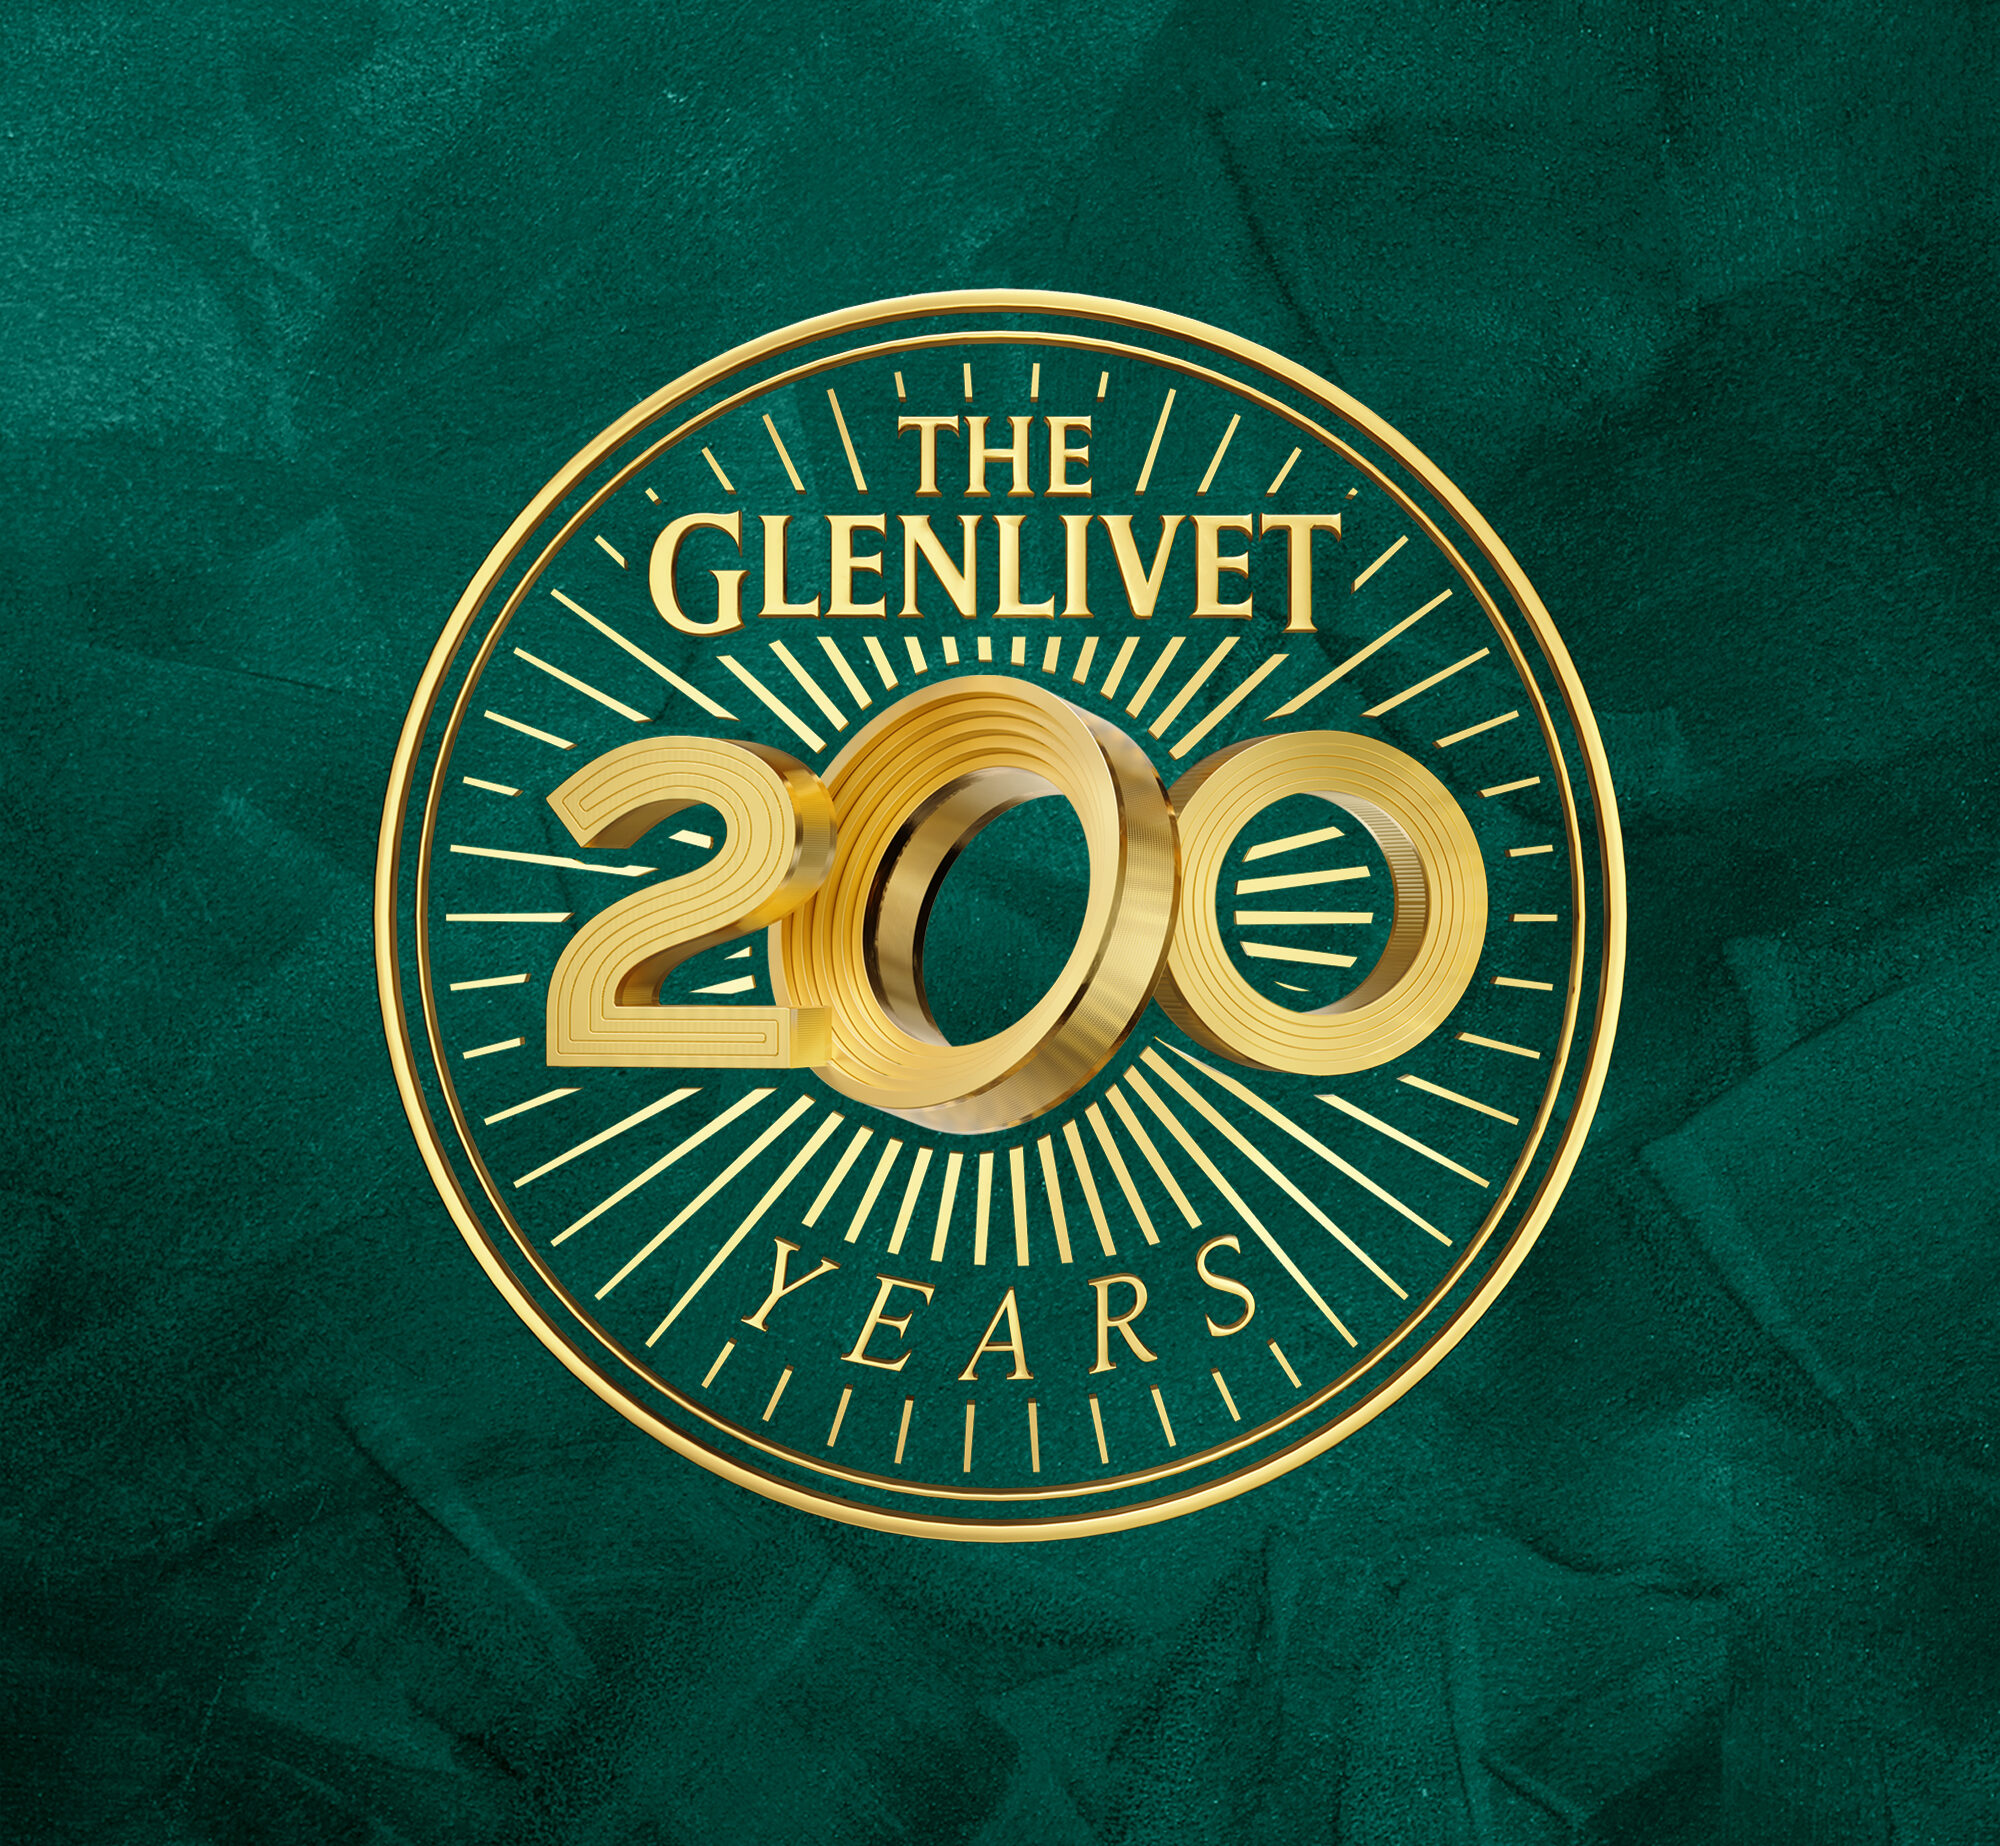 The Glenlivet 200 Year Key visual